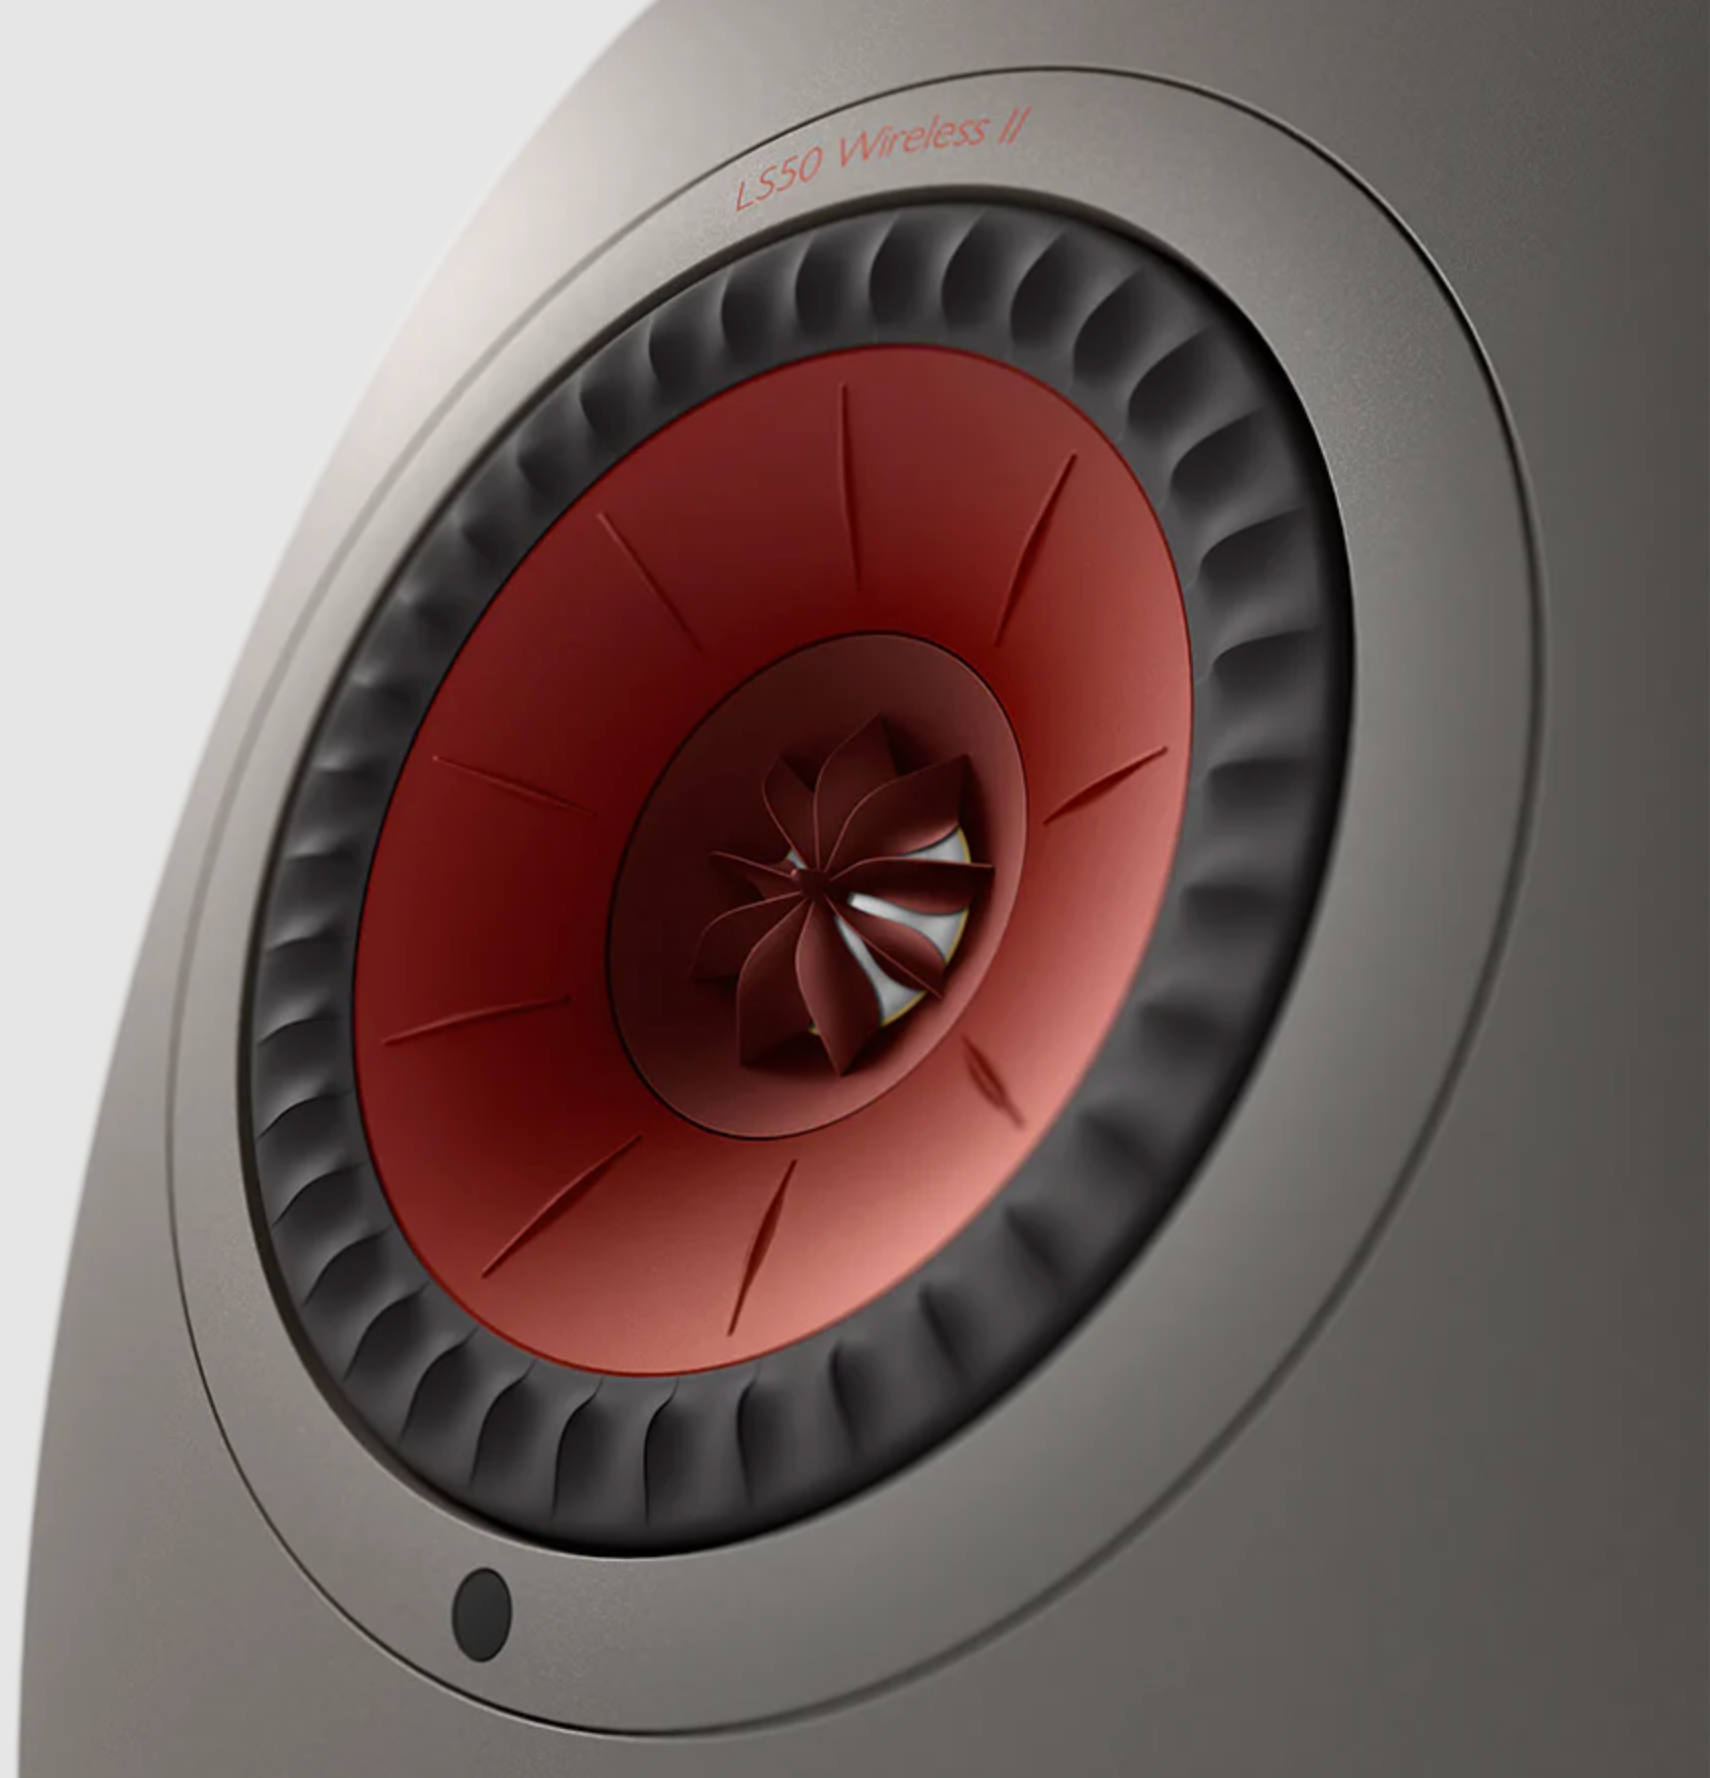 KEF LS50 Wireless II Speakers in Titanium Gray - close up